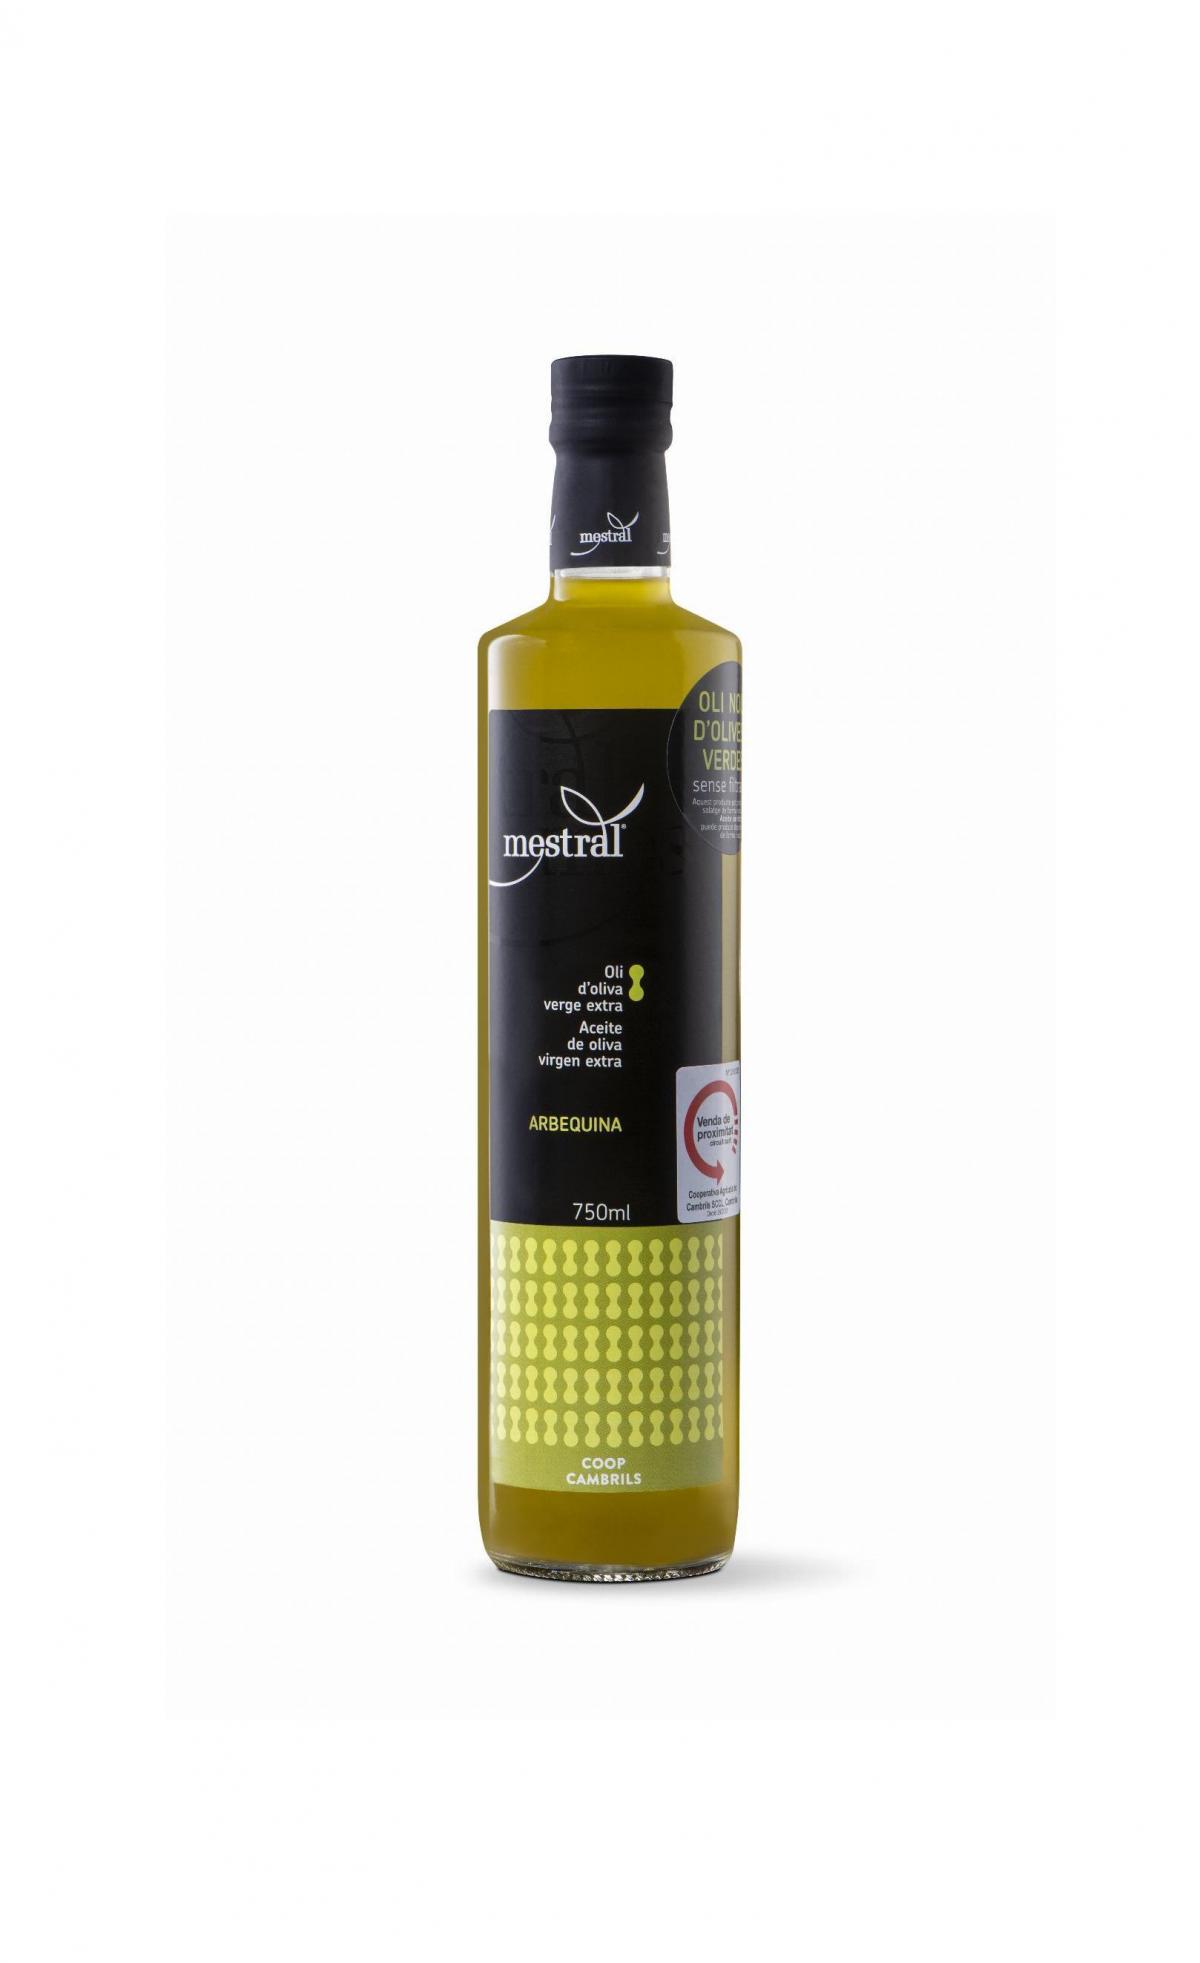 Olis i infusionats - Oli d'oliva Verge Extra Mestral DEL RAIG amp. 750 ml  Siurana - Mestral Cambrils